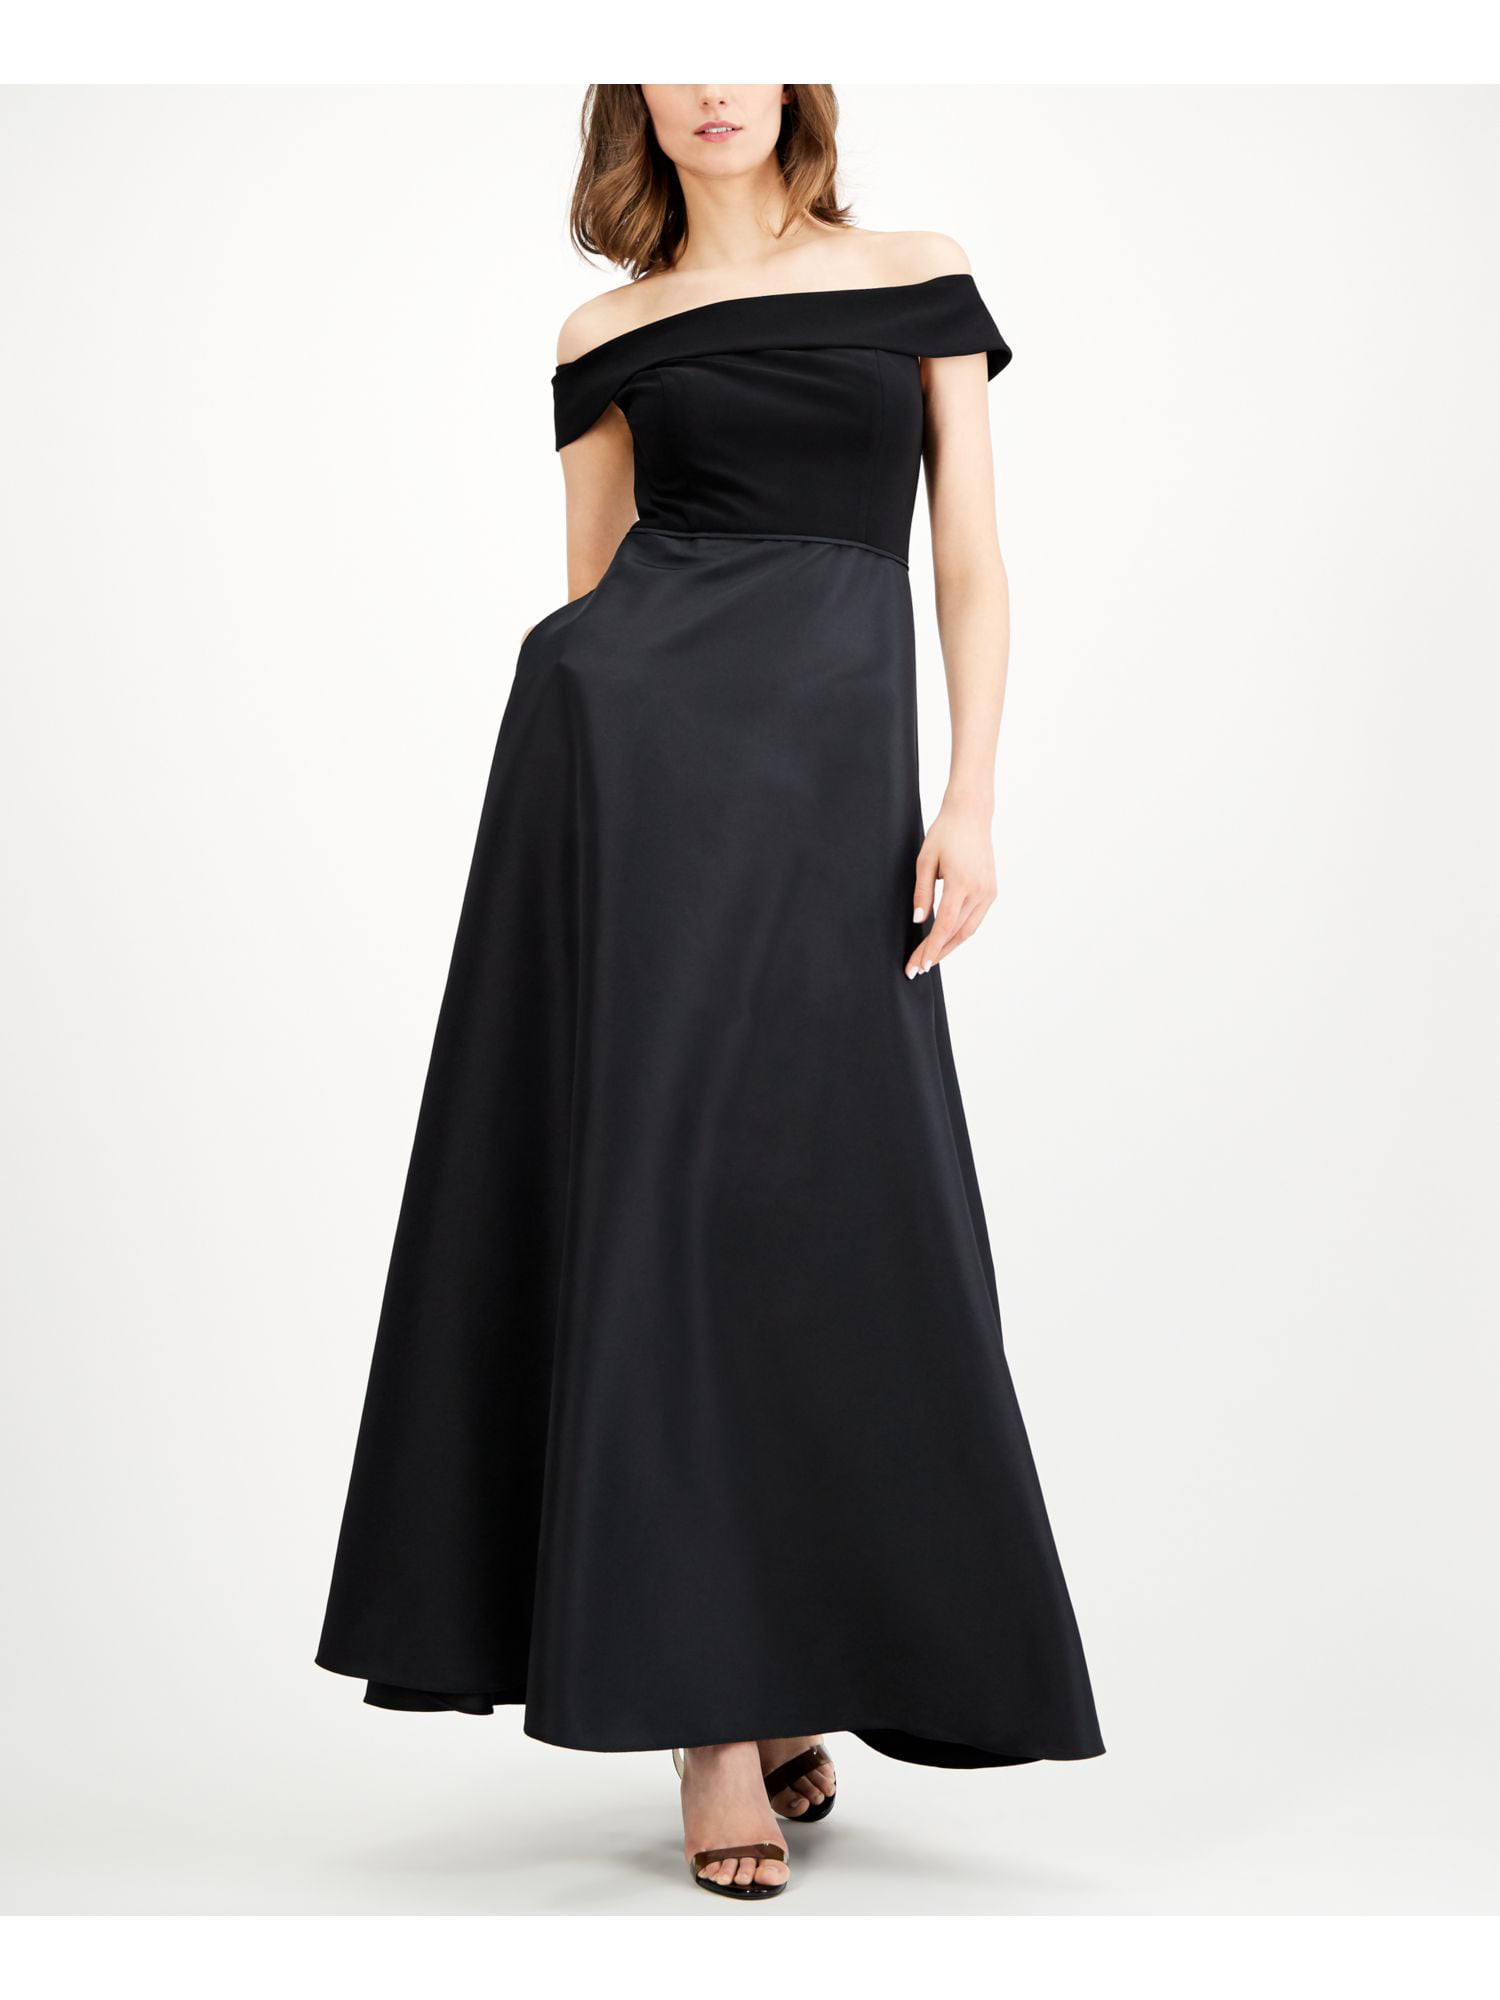 black short sleeve dress